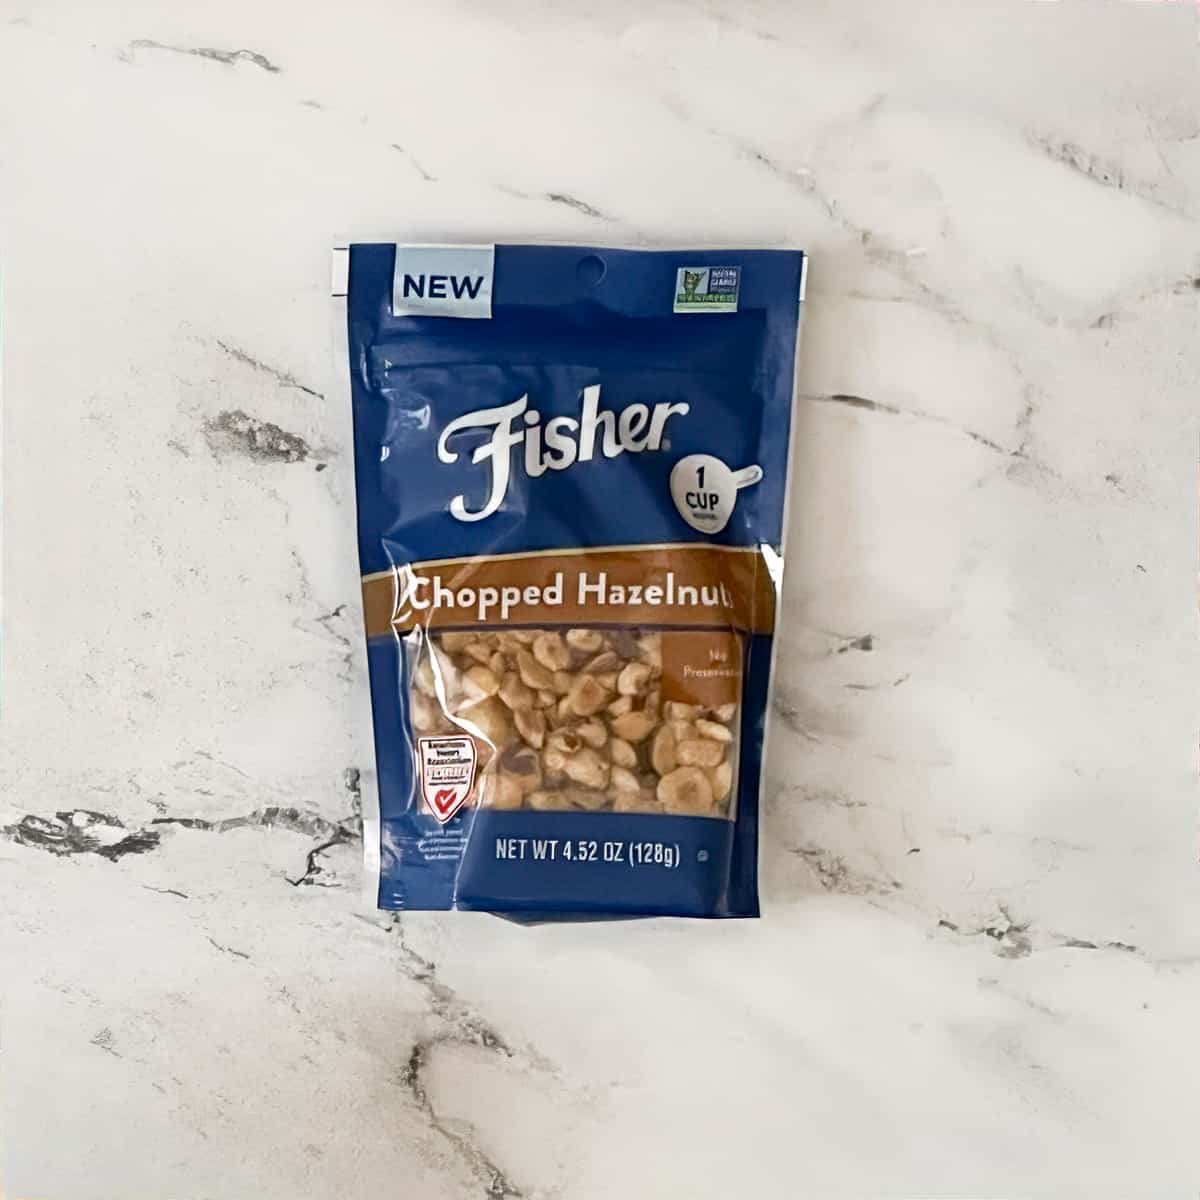 A bag of Fisher's Chopped Hazelnuts.